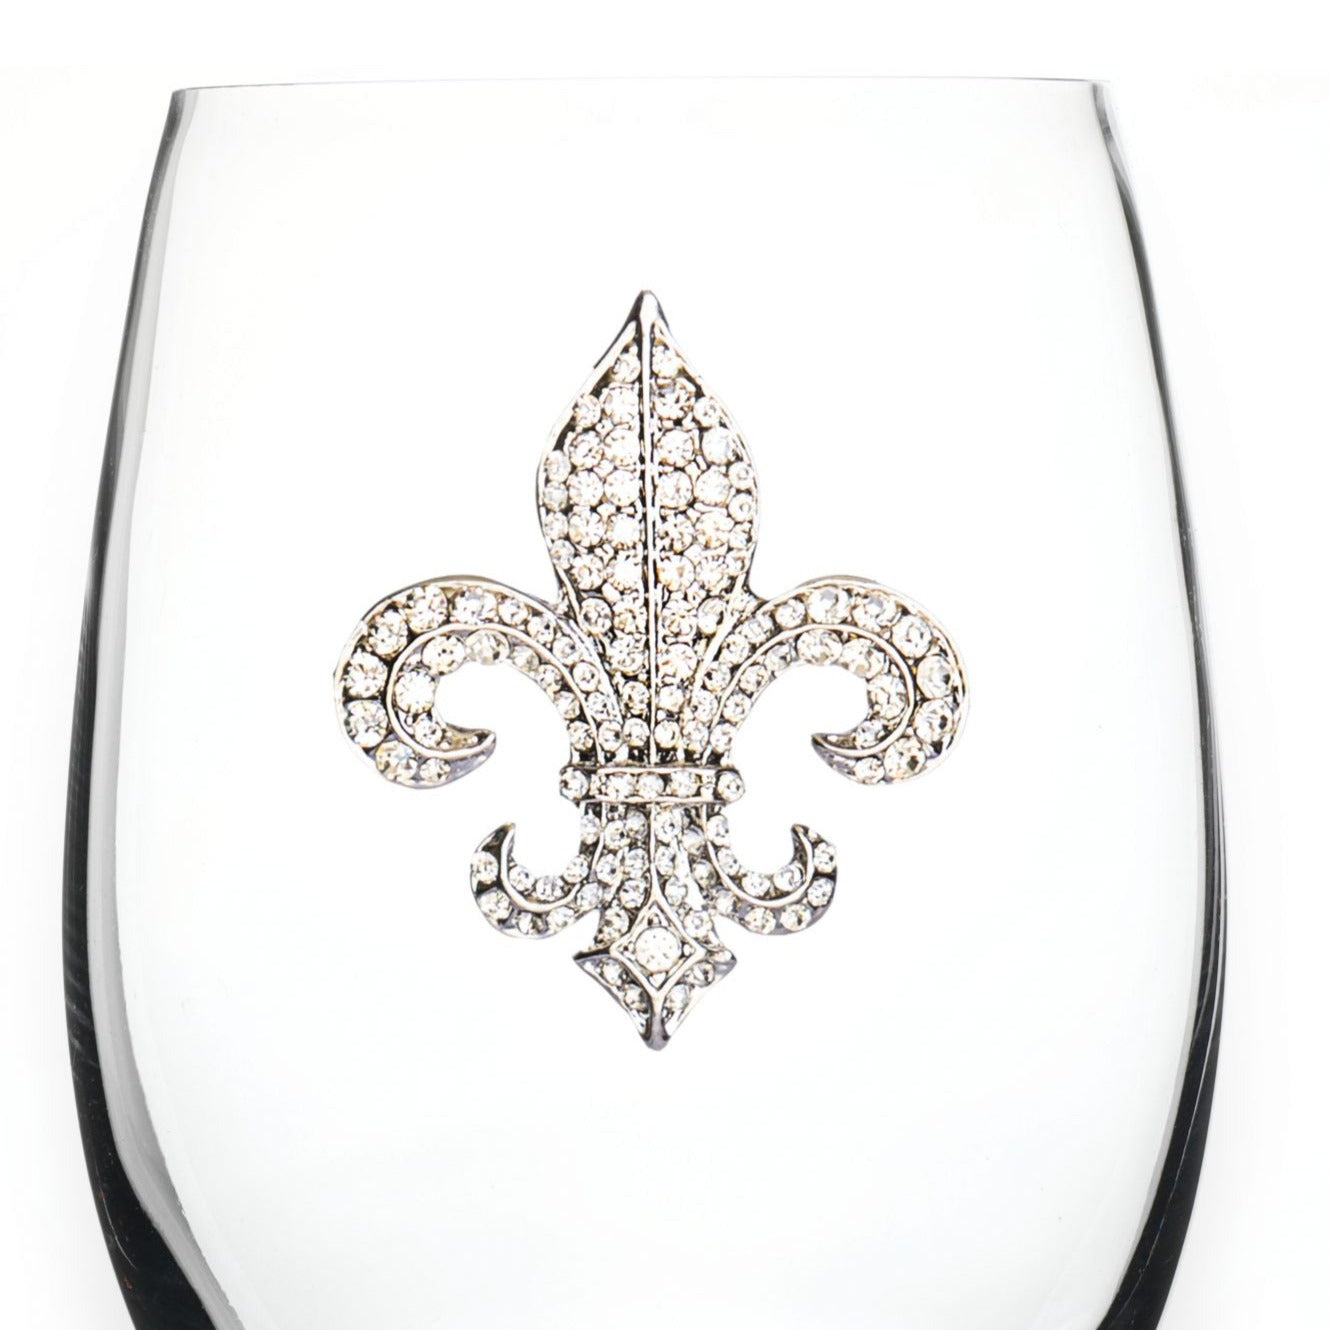 Jeweled Stemless Wine Glass - Every Day - Fleur De Lis